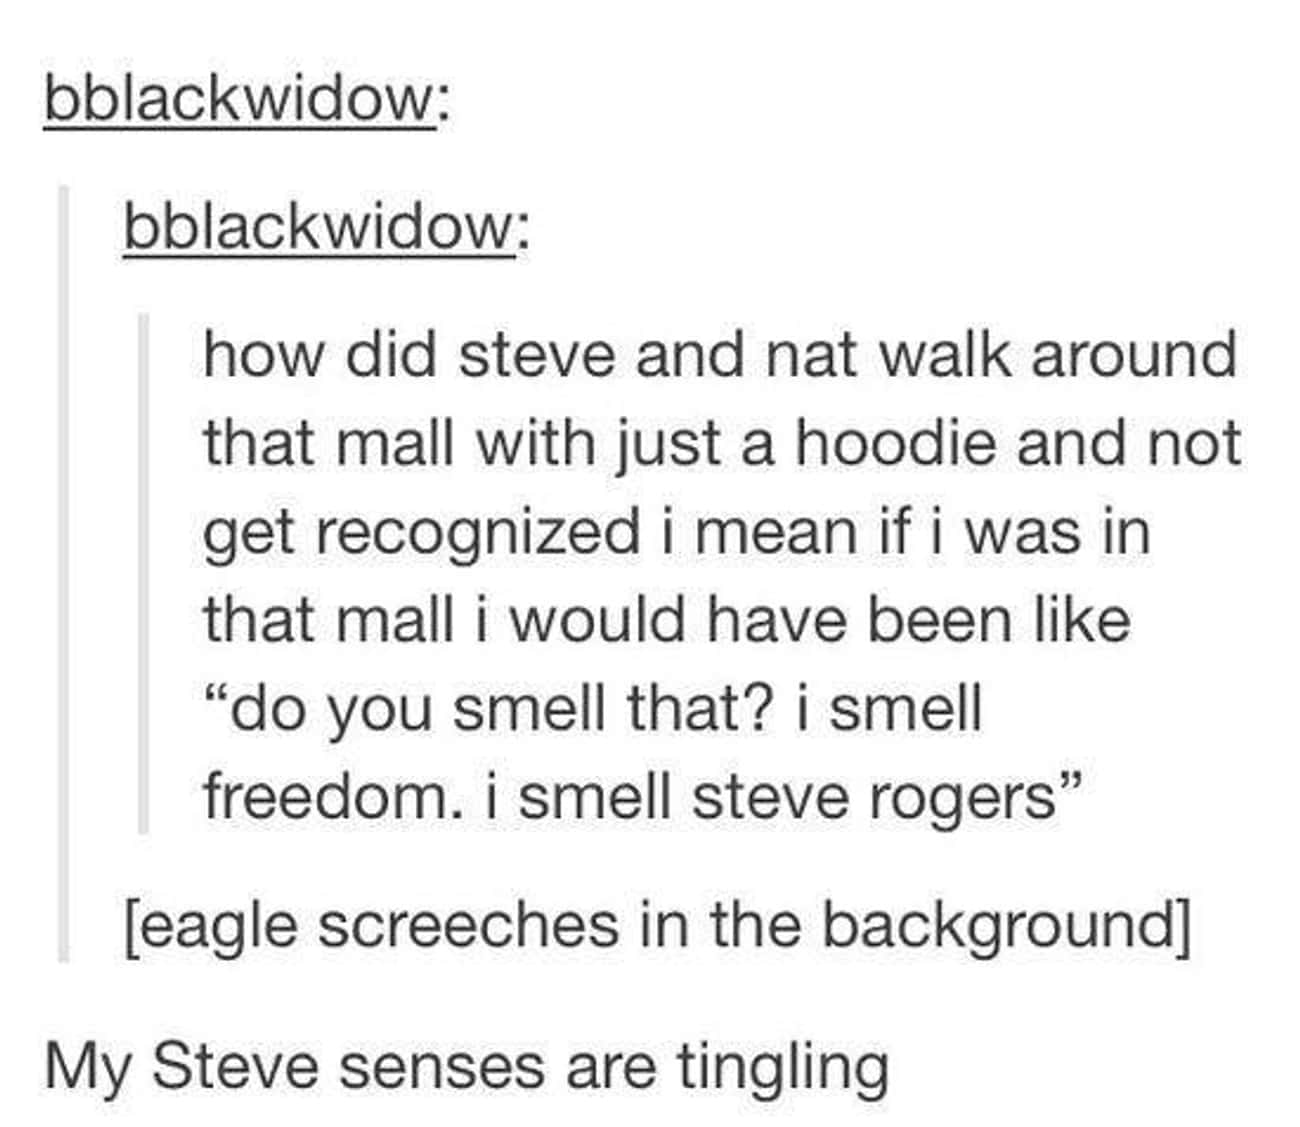 Steve's Disguise